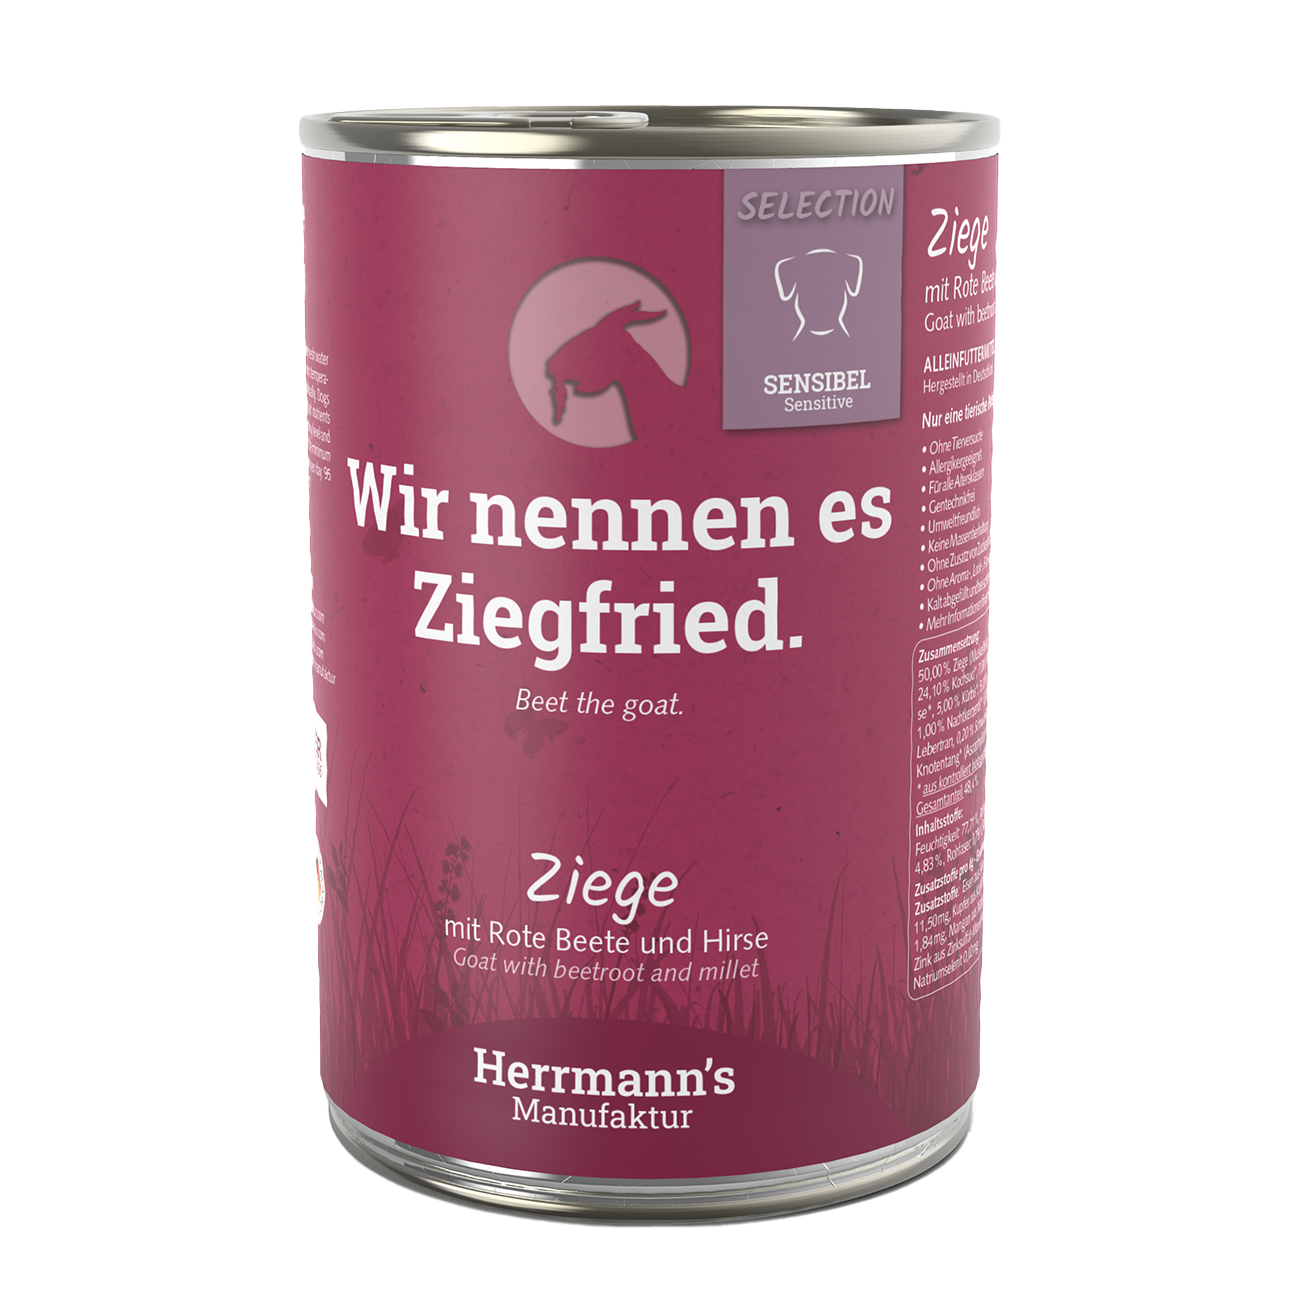 Herrmanns Sensibel Ziege | Rote Beete Apfel und Kürbis | Dose-PetsFinest